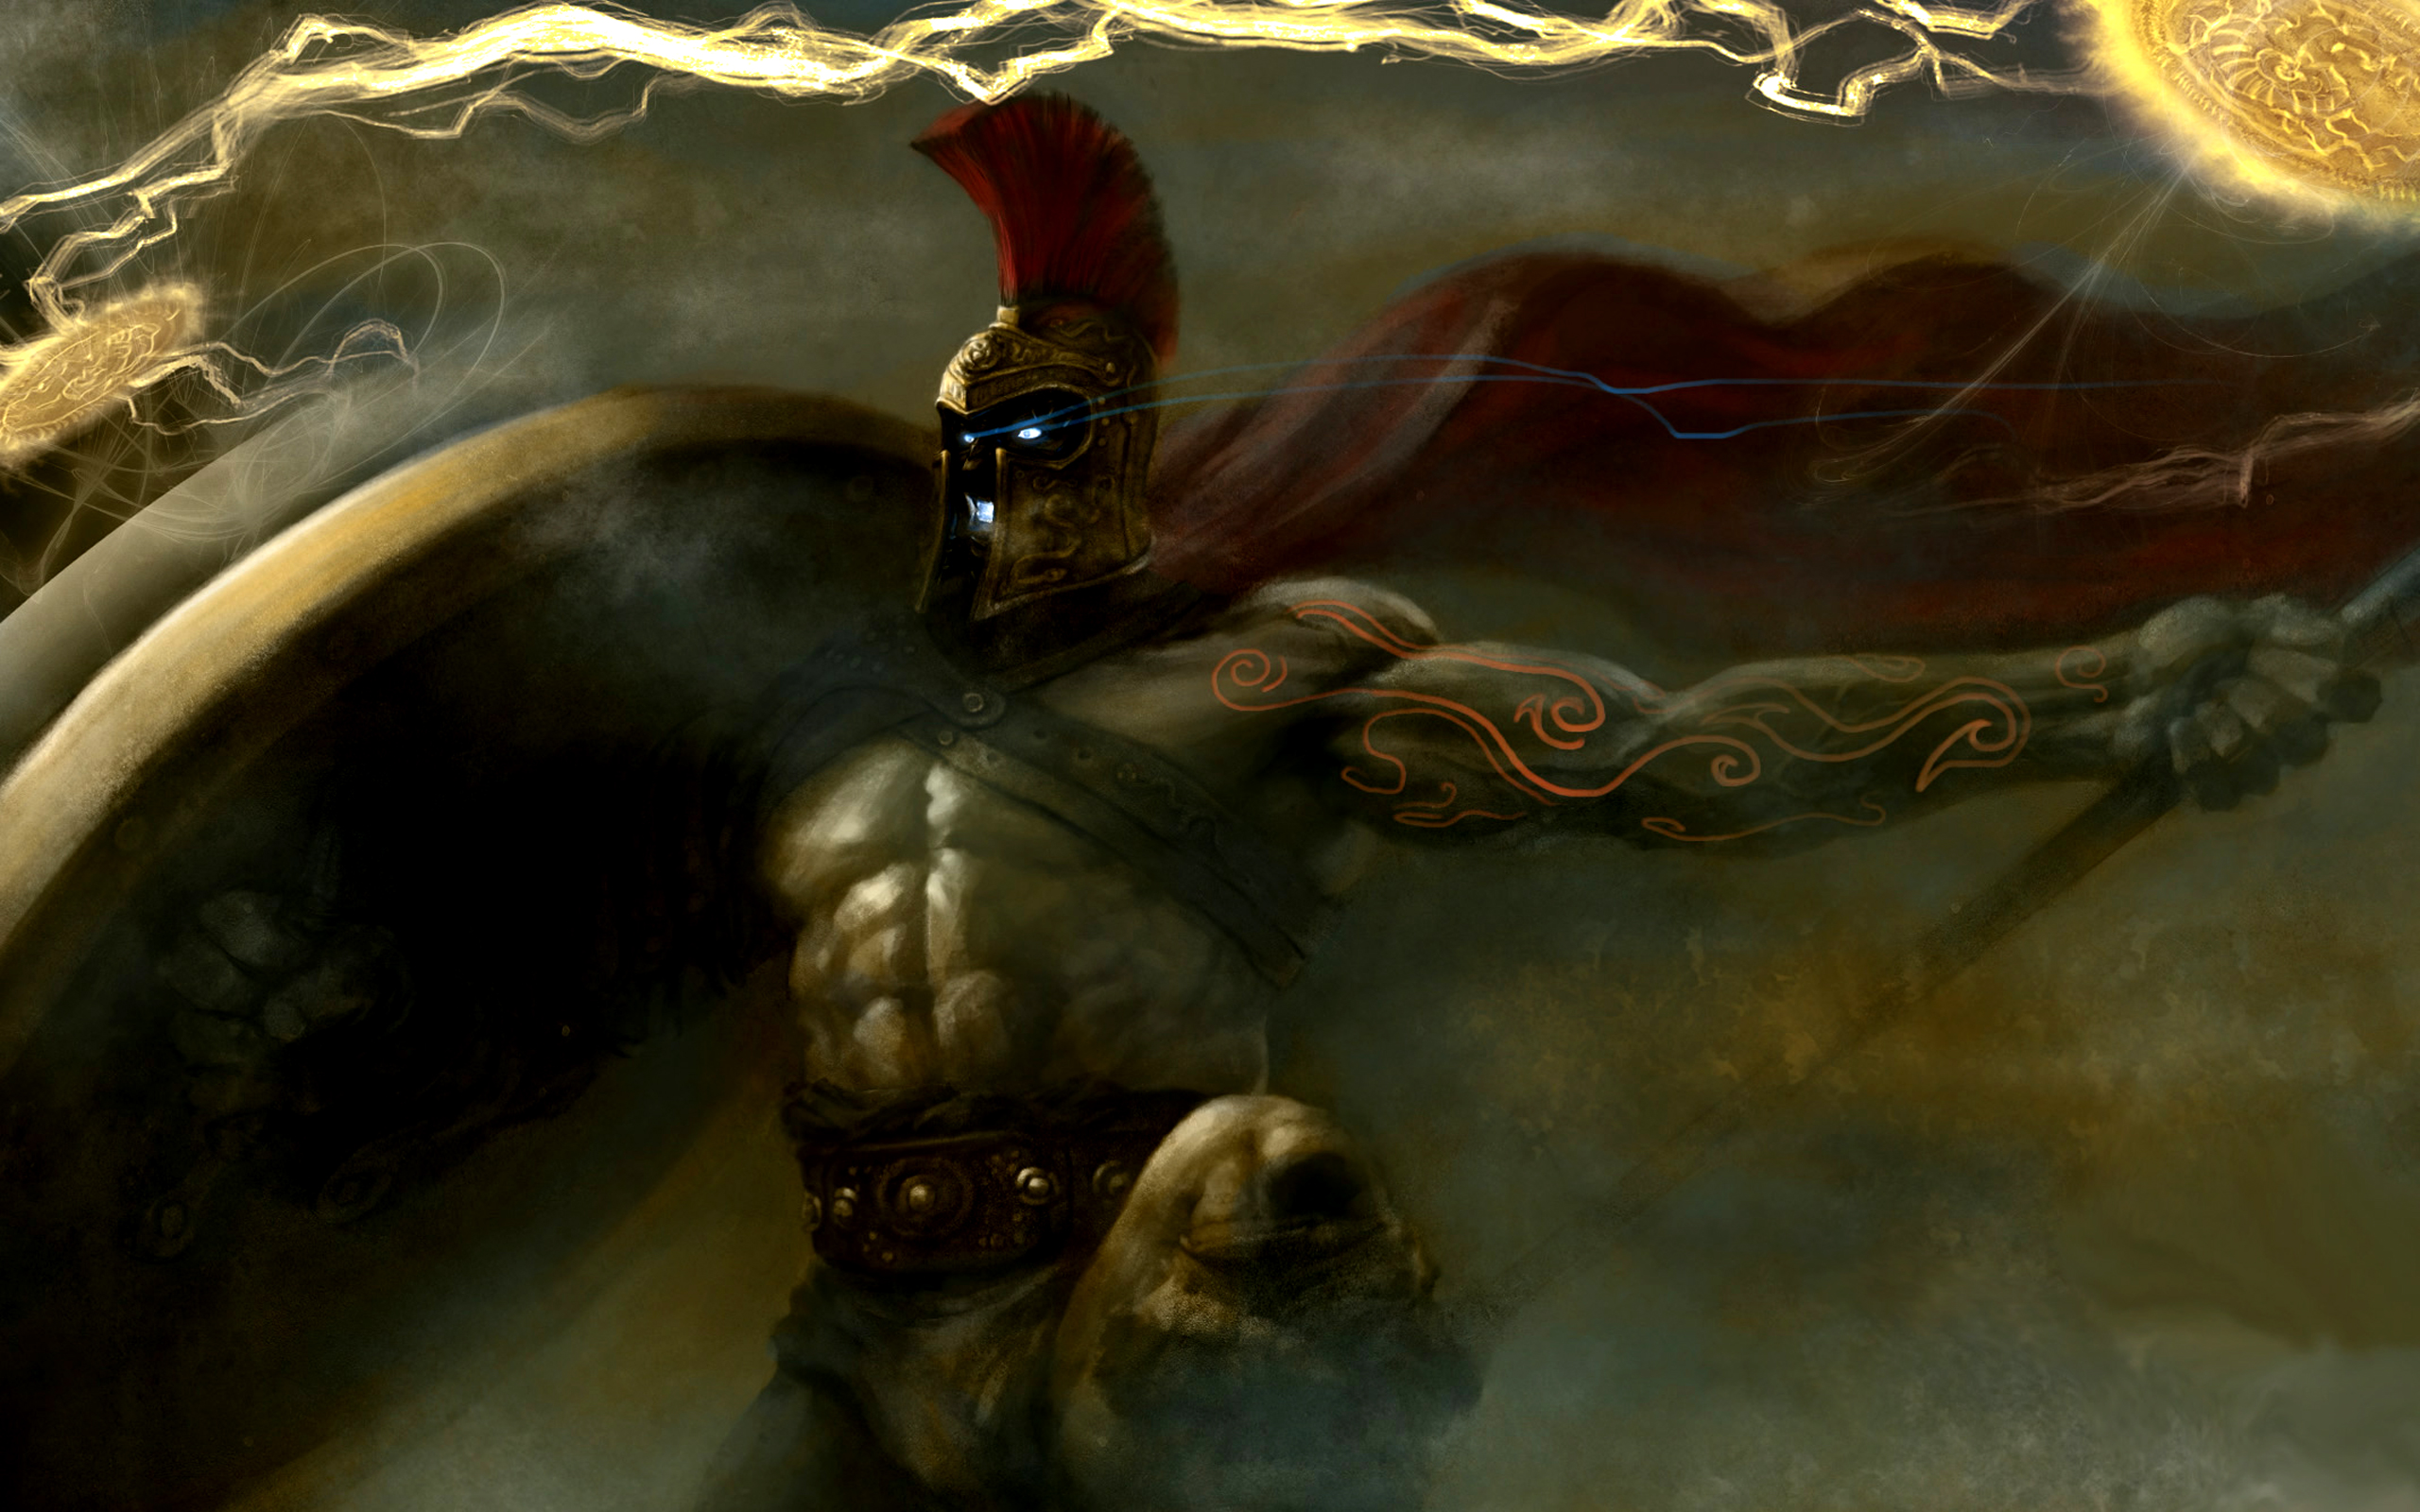 League of Legends champion, Thunderfury, wielding Pantheon's legendary weapon in Targon.